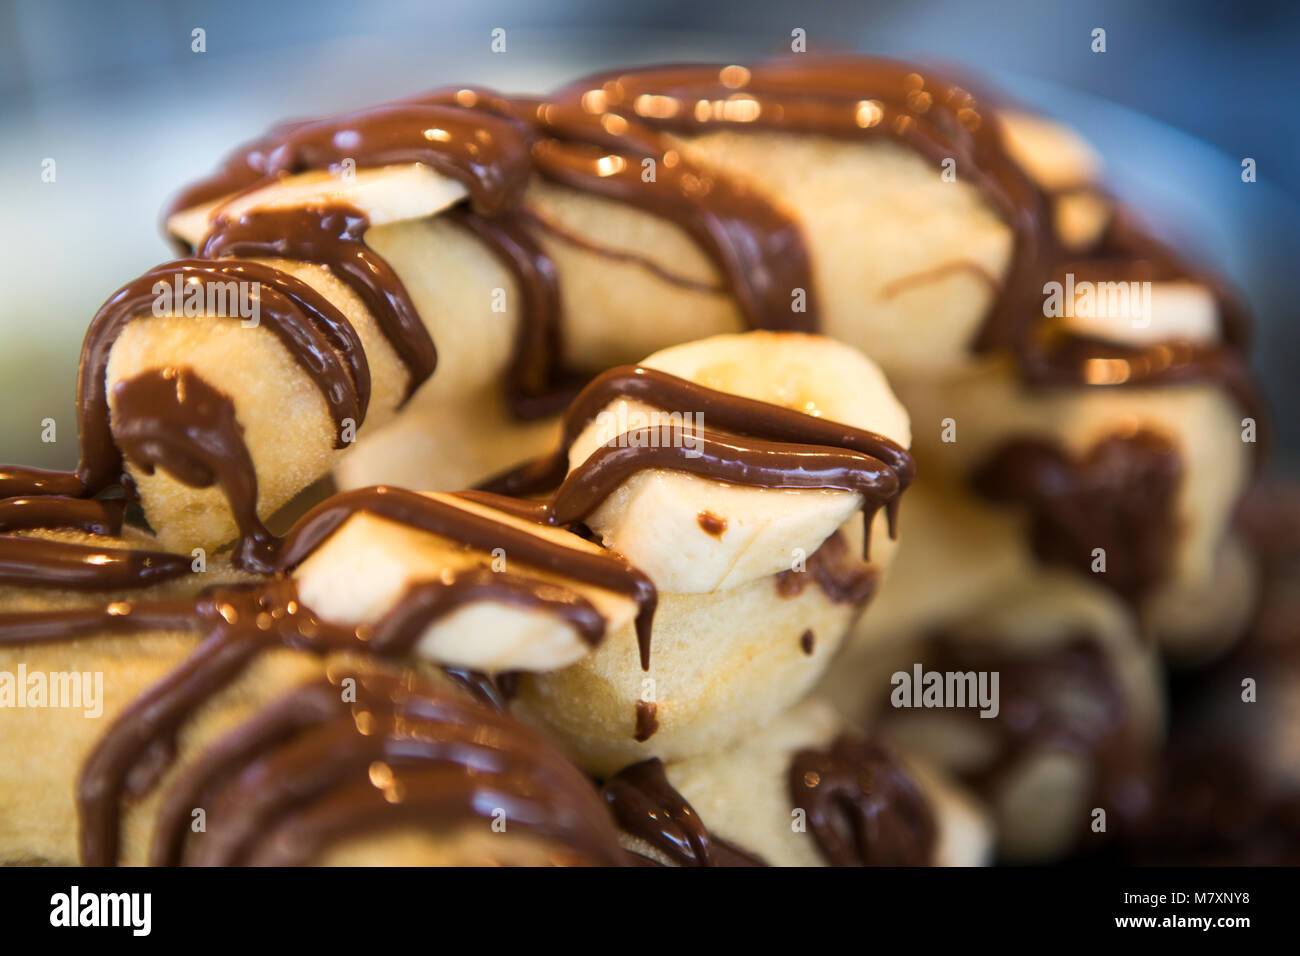 Banana and chocolate churros. Stock Photo